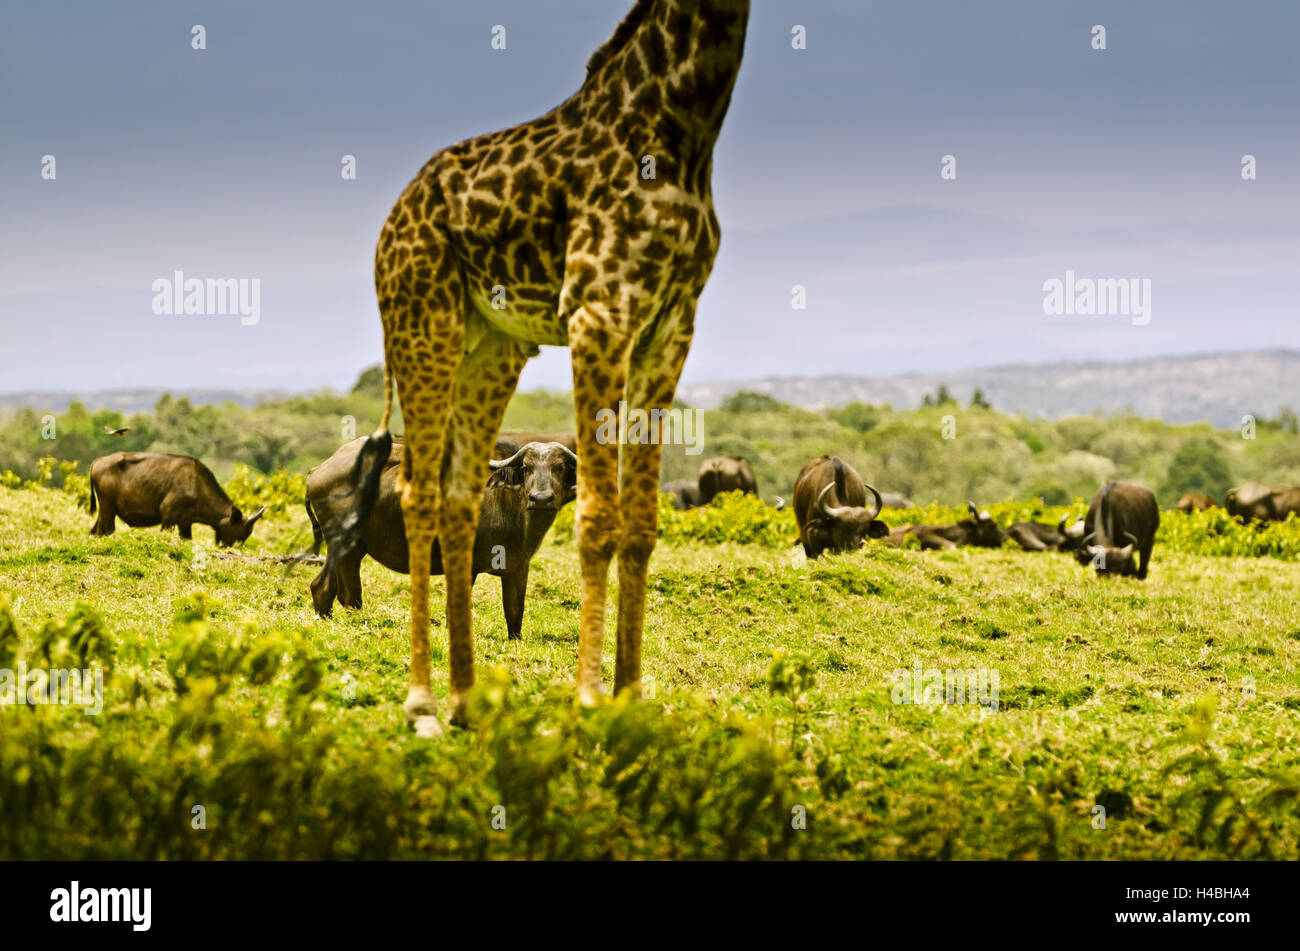 Africa, Tanzania, East Africa, Mt. Meru, Arusha National Park, buffalo, giraffe, Stock Photo